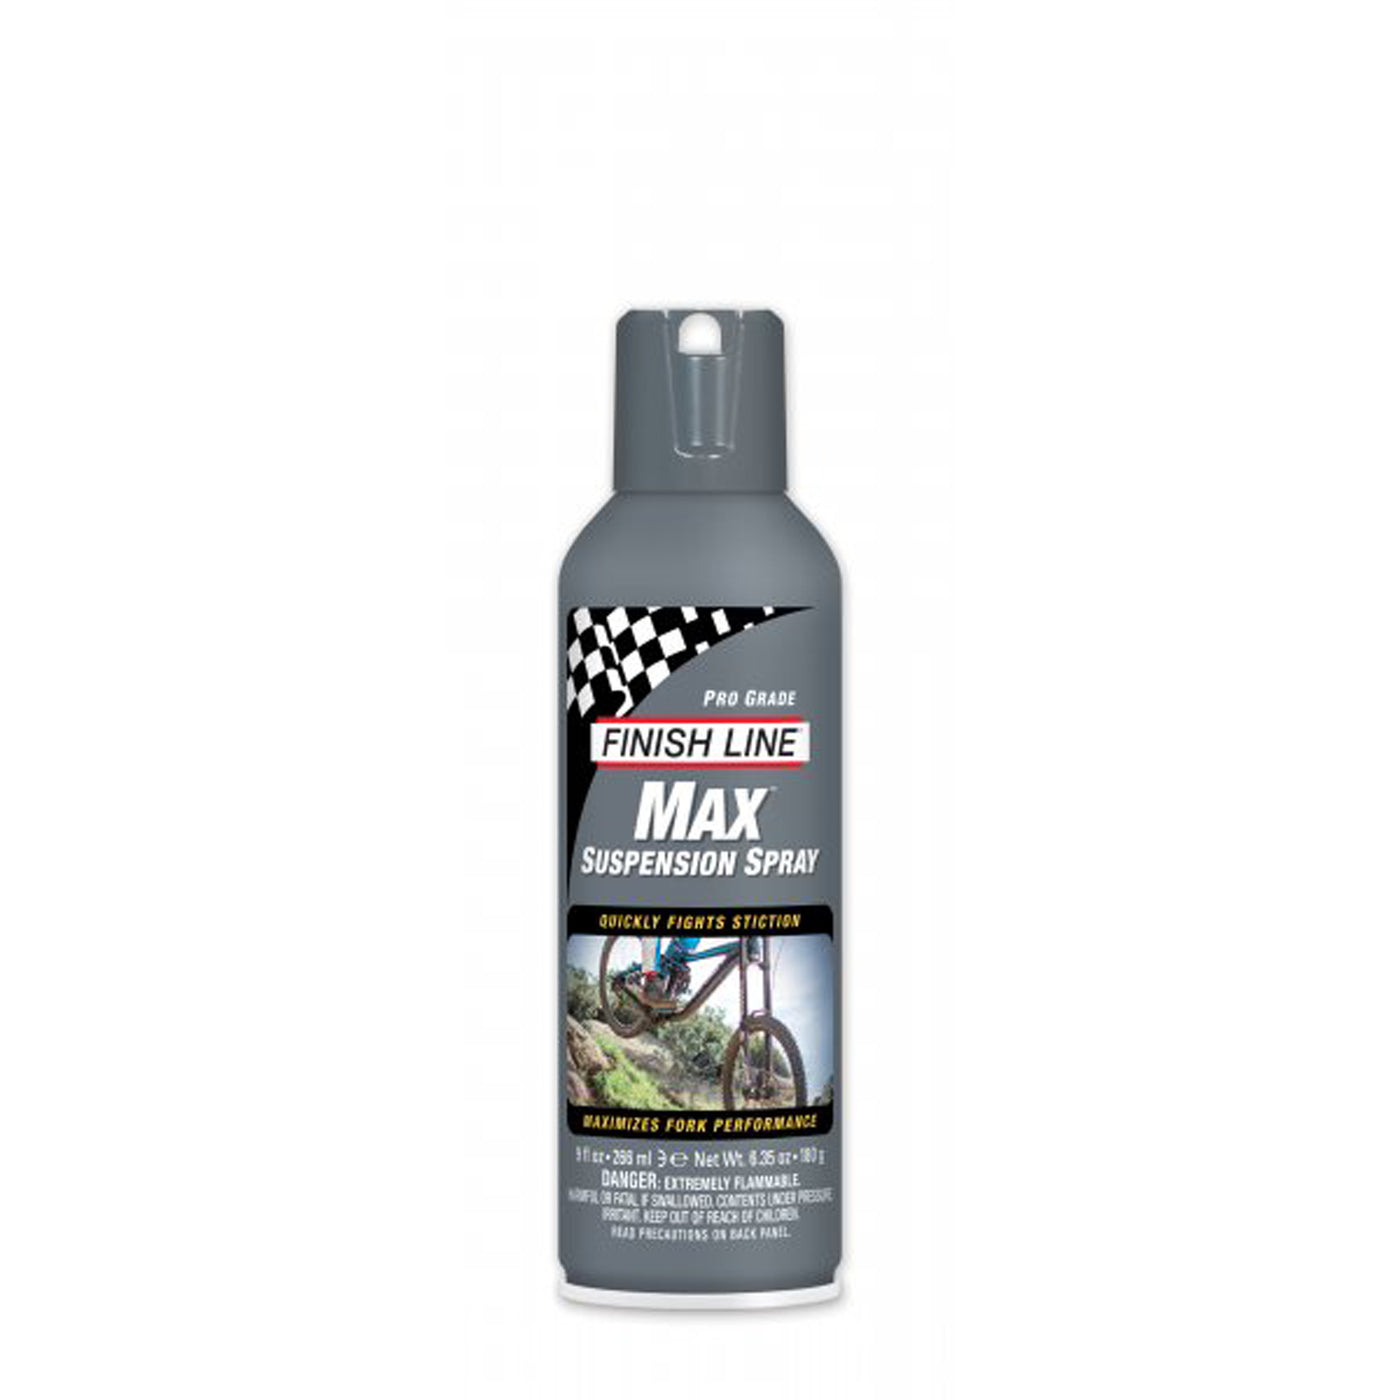 Spray de suspension Finish Line MAX 9 oz